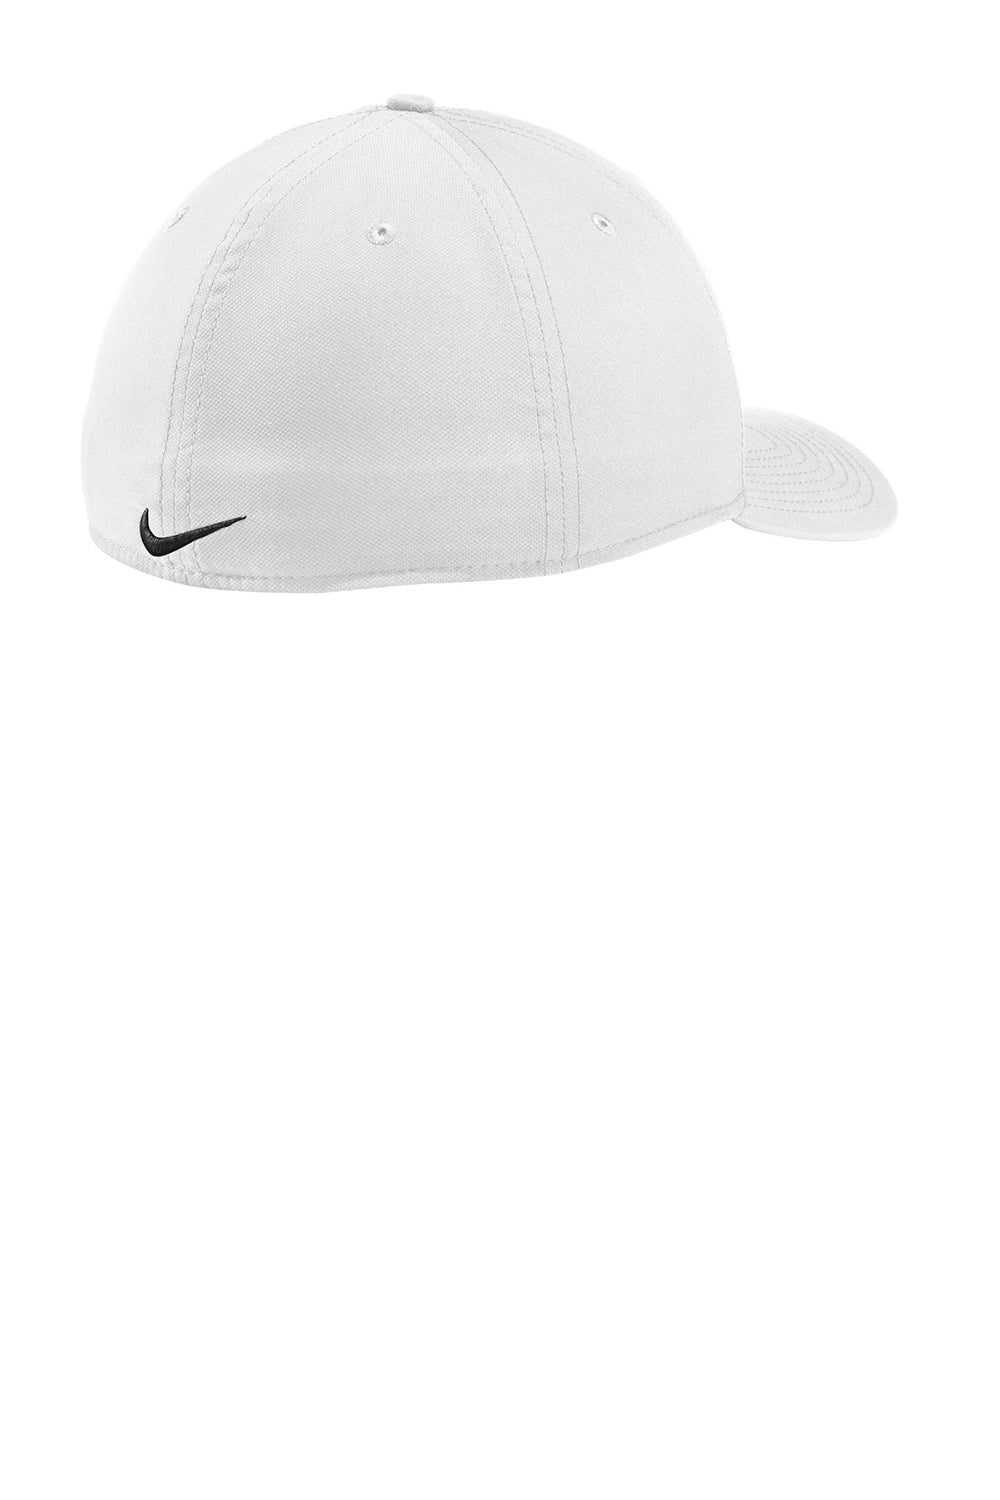 Nike NKAA1860 Mens Dri-Fit Moisture Wicking Stretch Fit Hat White/Black Flat Back